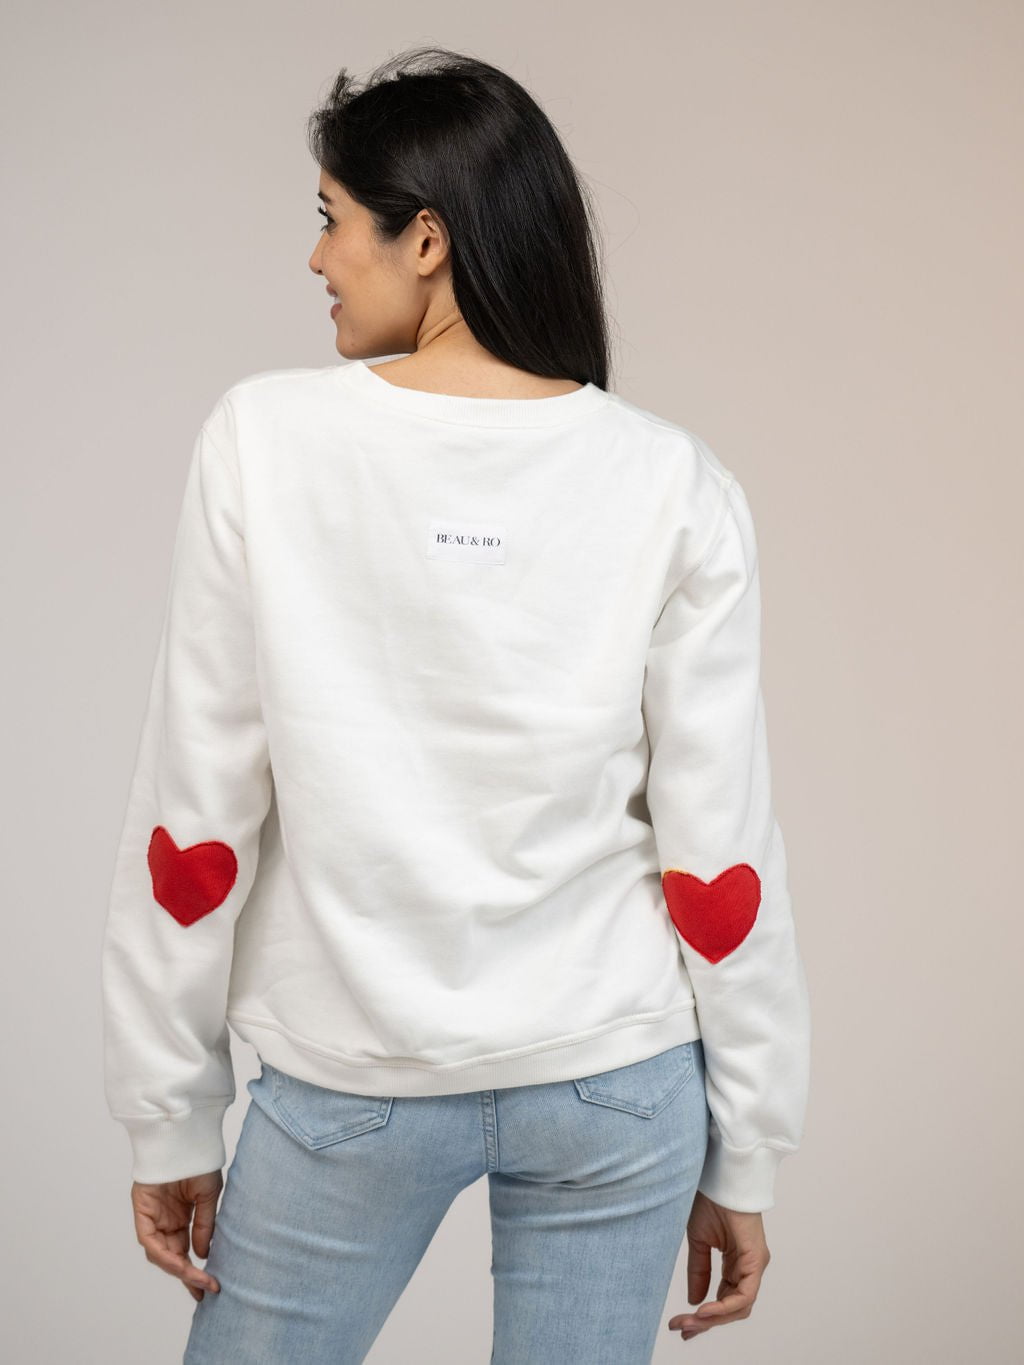 Beau & Ro Sweater Nantucket Hearts Crewneck Sweatshirt